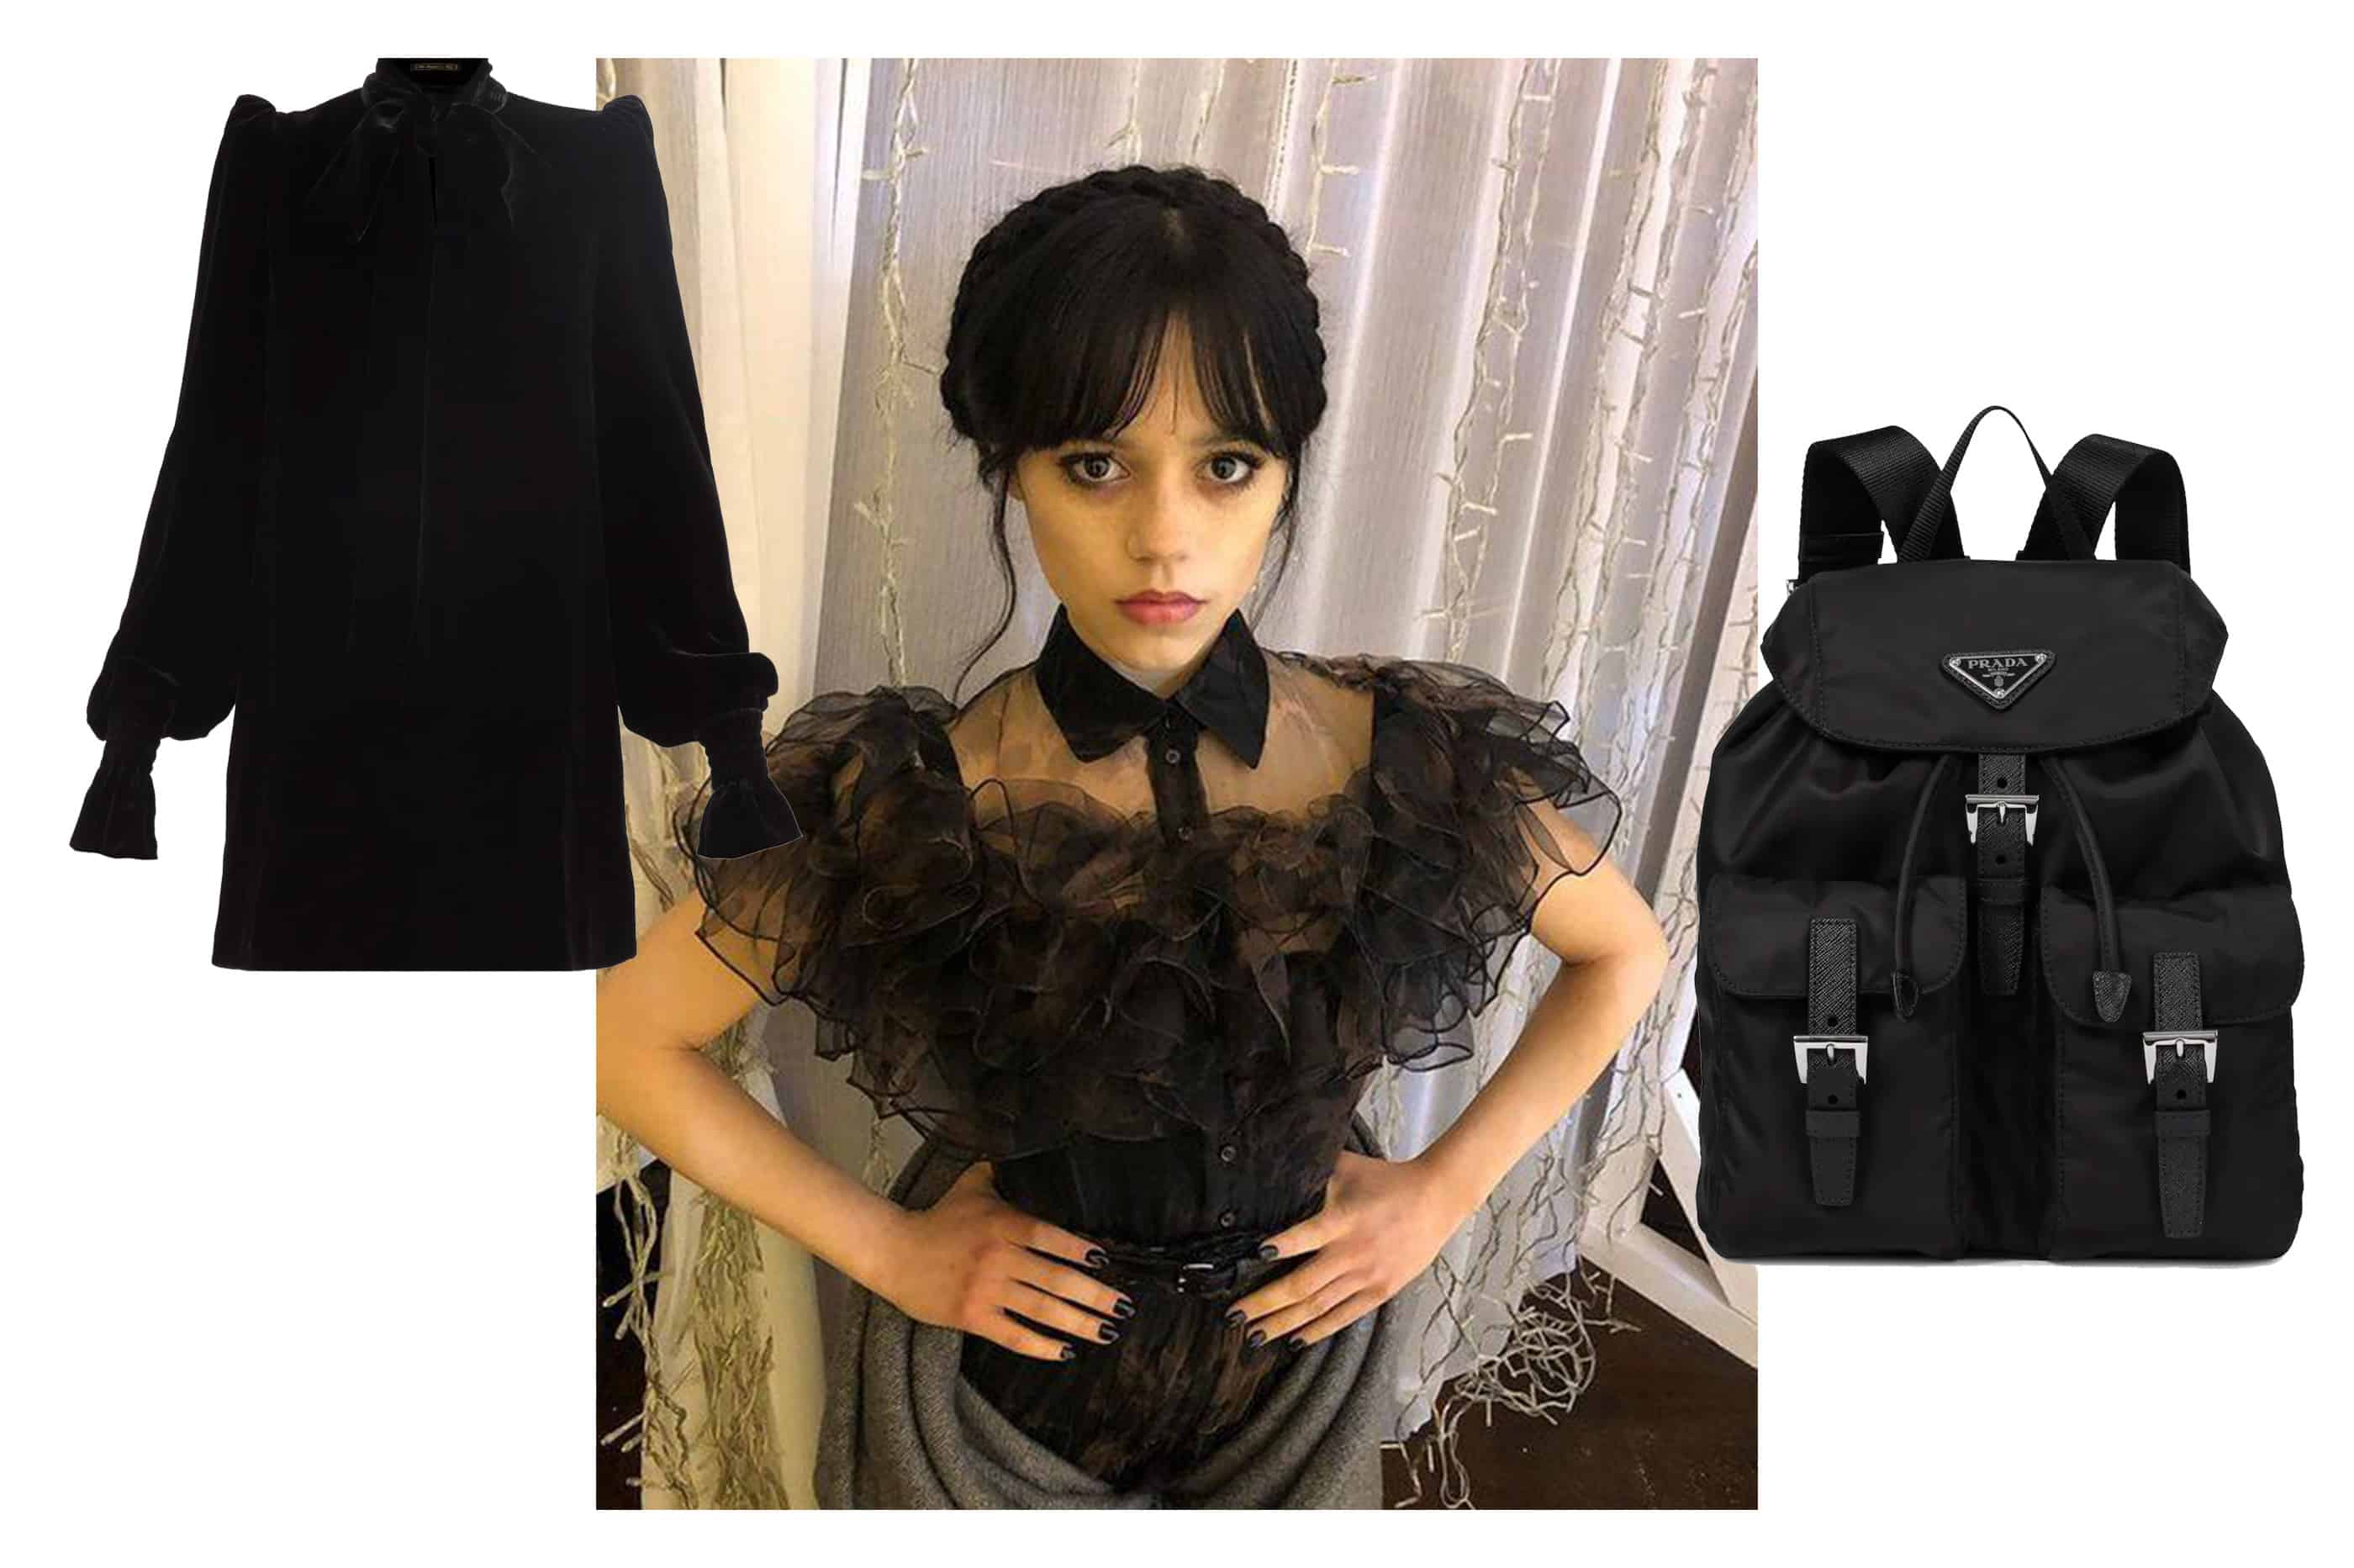 Mercredi Addams : La Nouvelle Influenceuse Mode Goth Girl 2022 ?